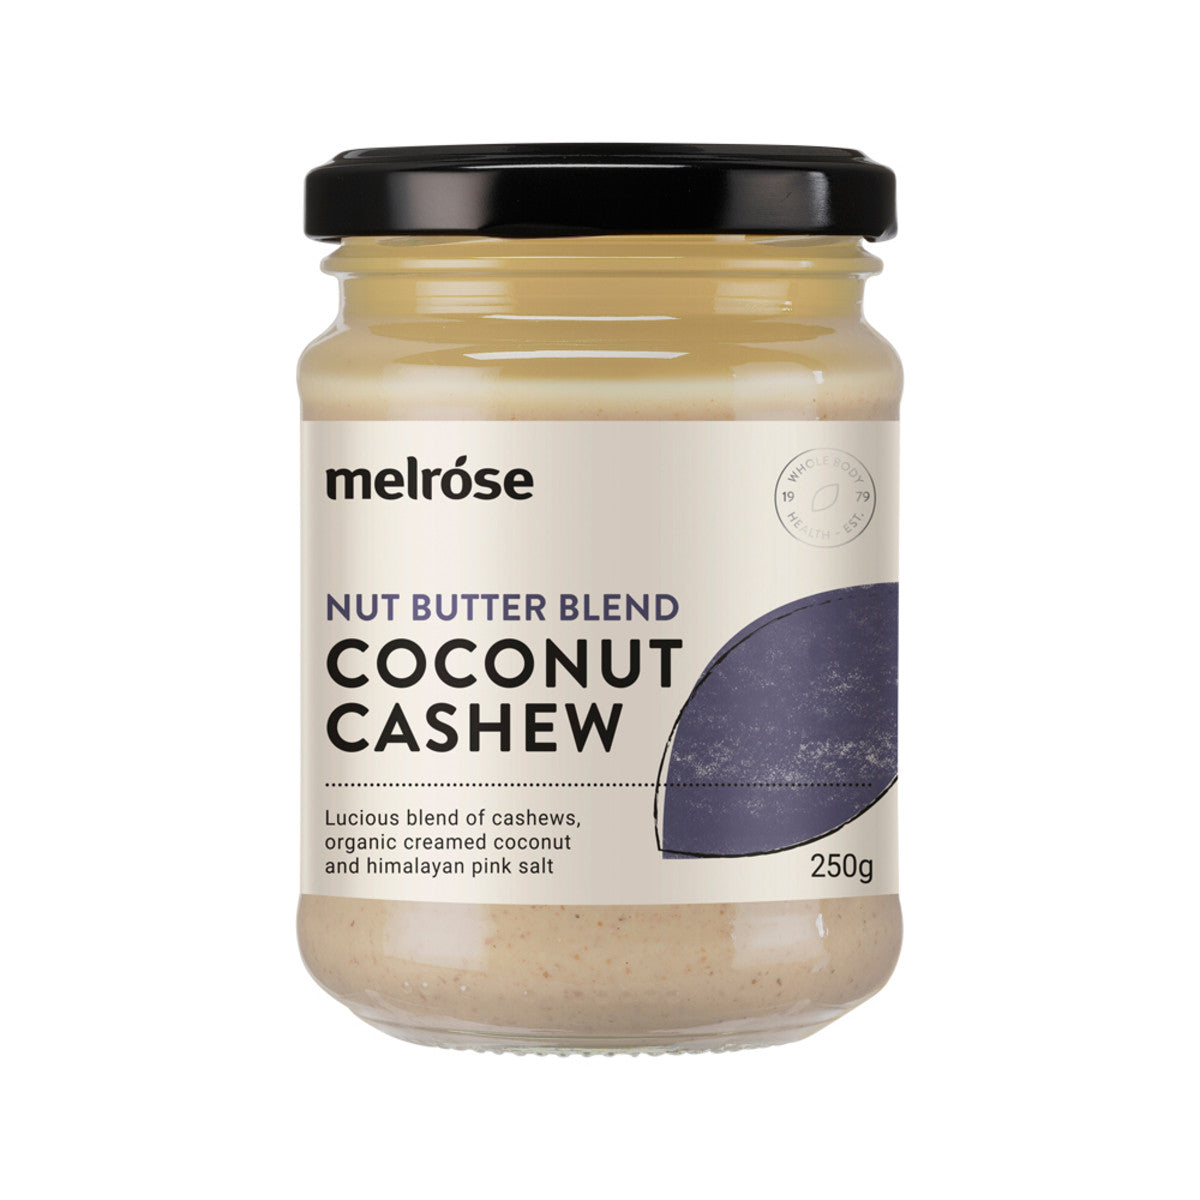 Melrose Nut Butter Blend Coconut Cashew 250g-The Living Co.